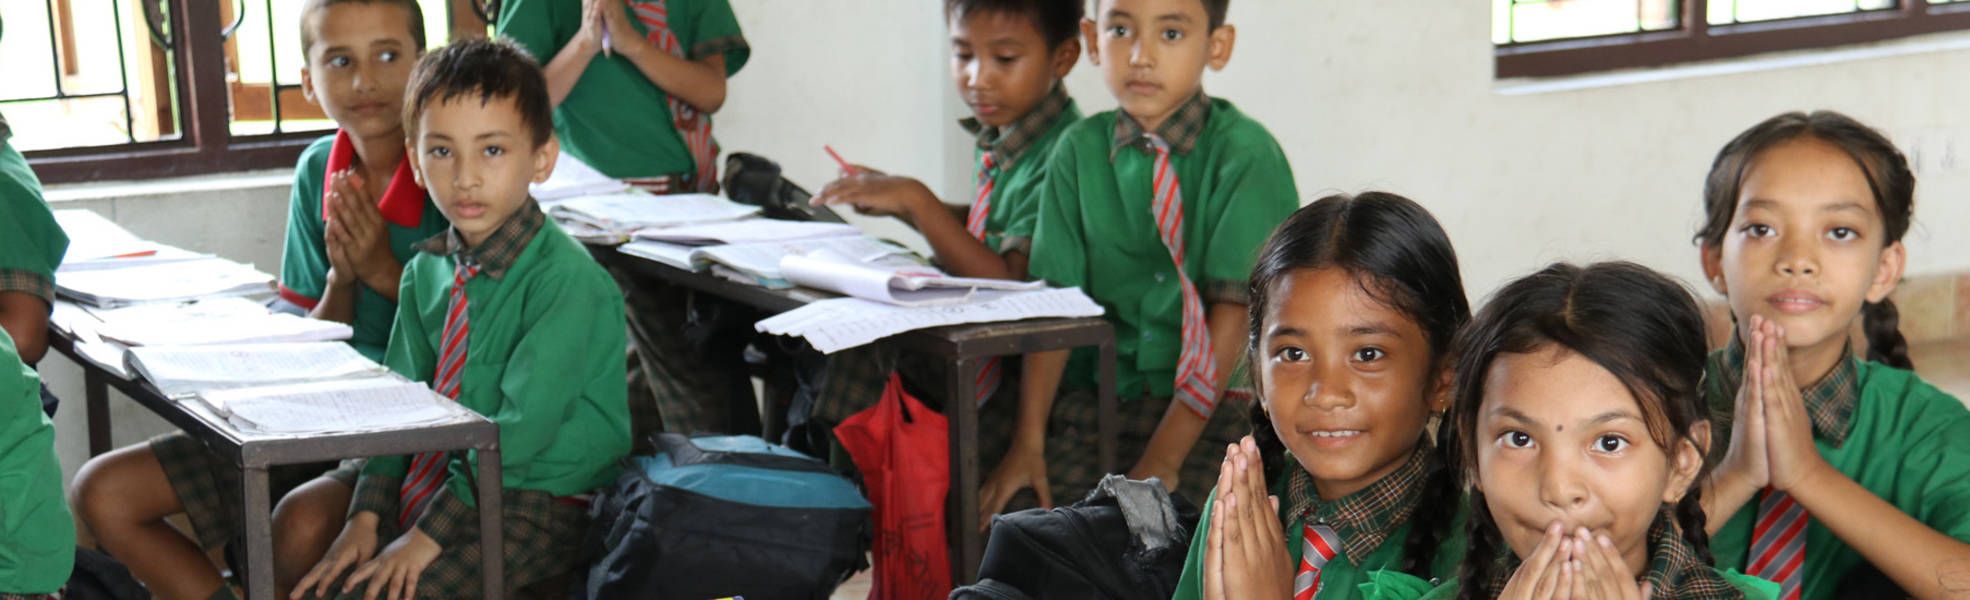 Social sabbatical at a school in Nepal